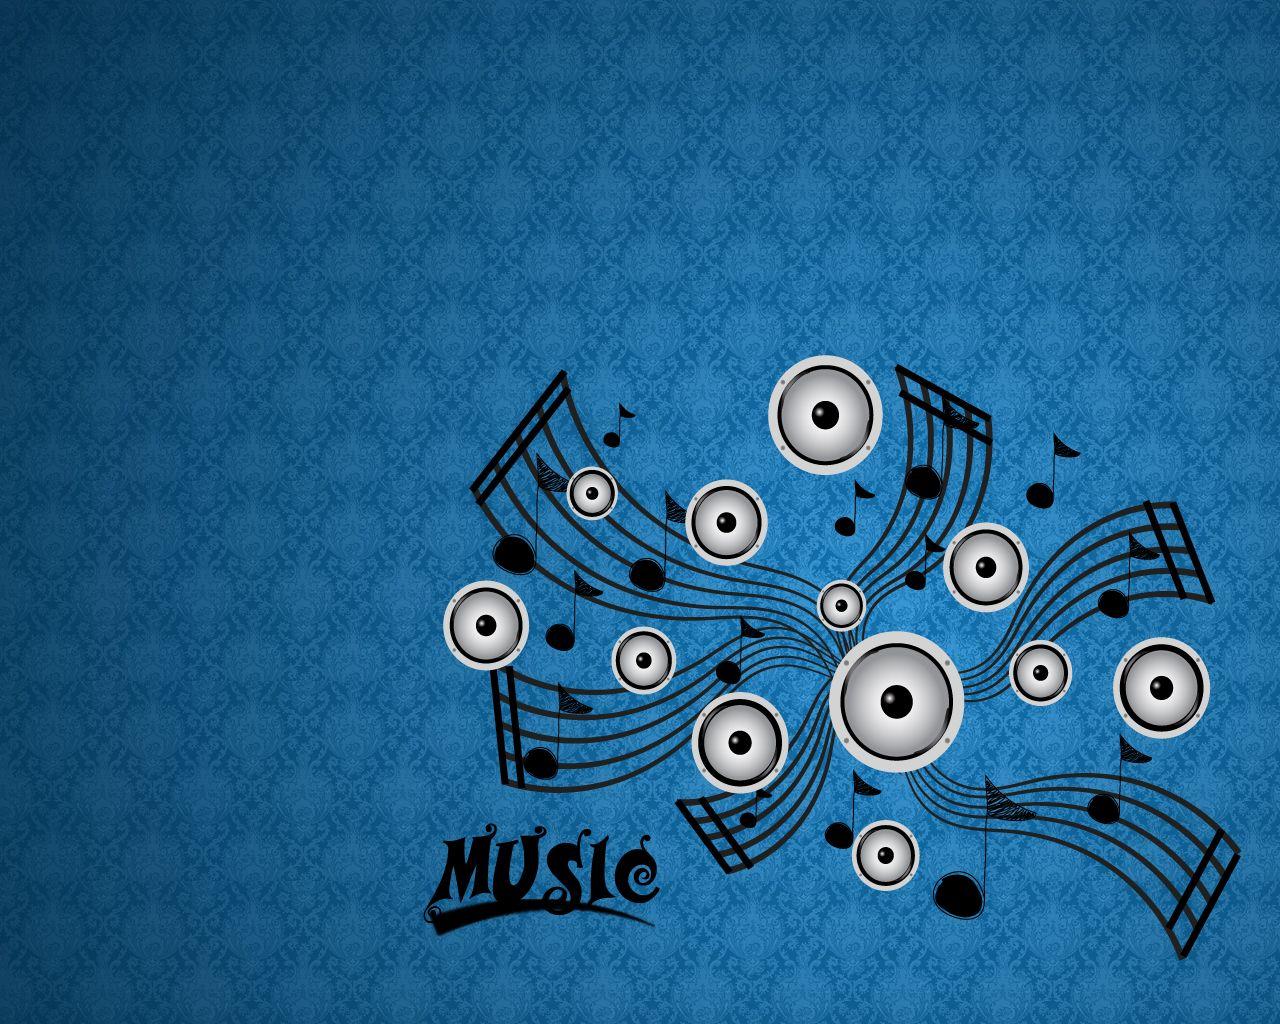 Download desktop wallpaper Theme music wallpaper